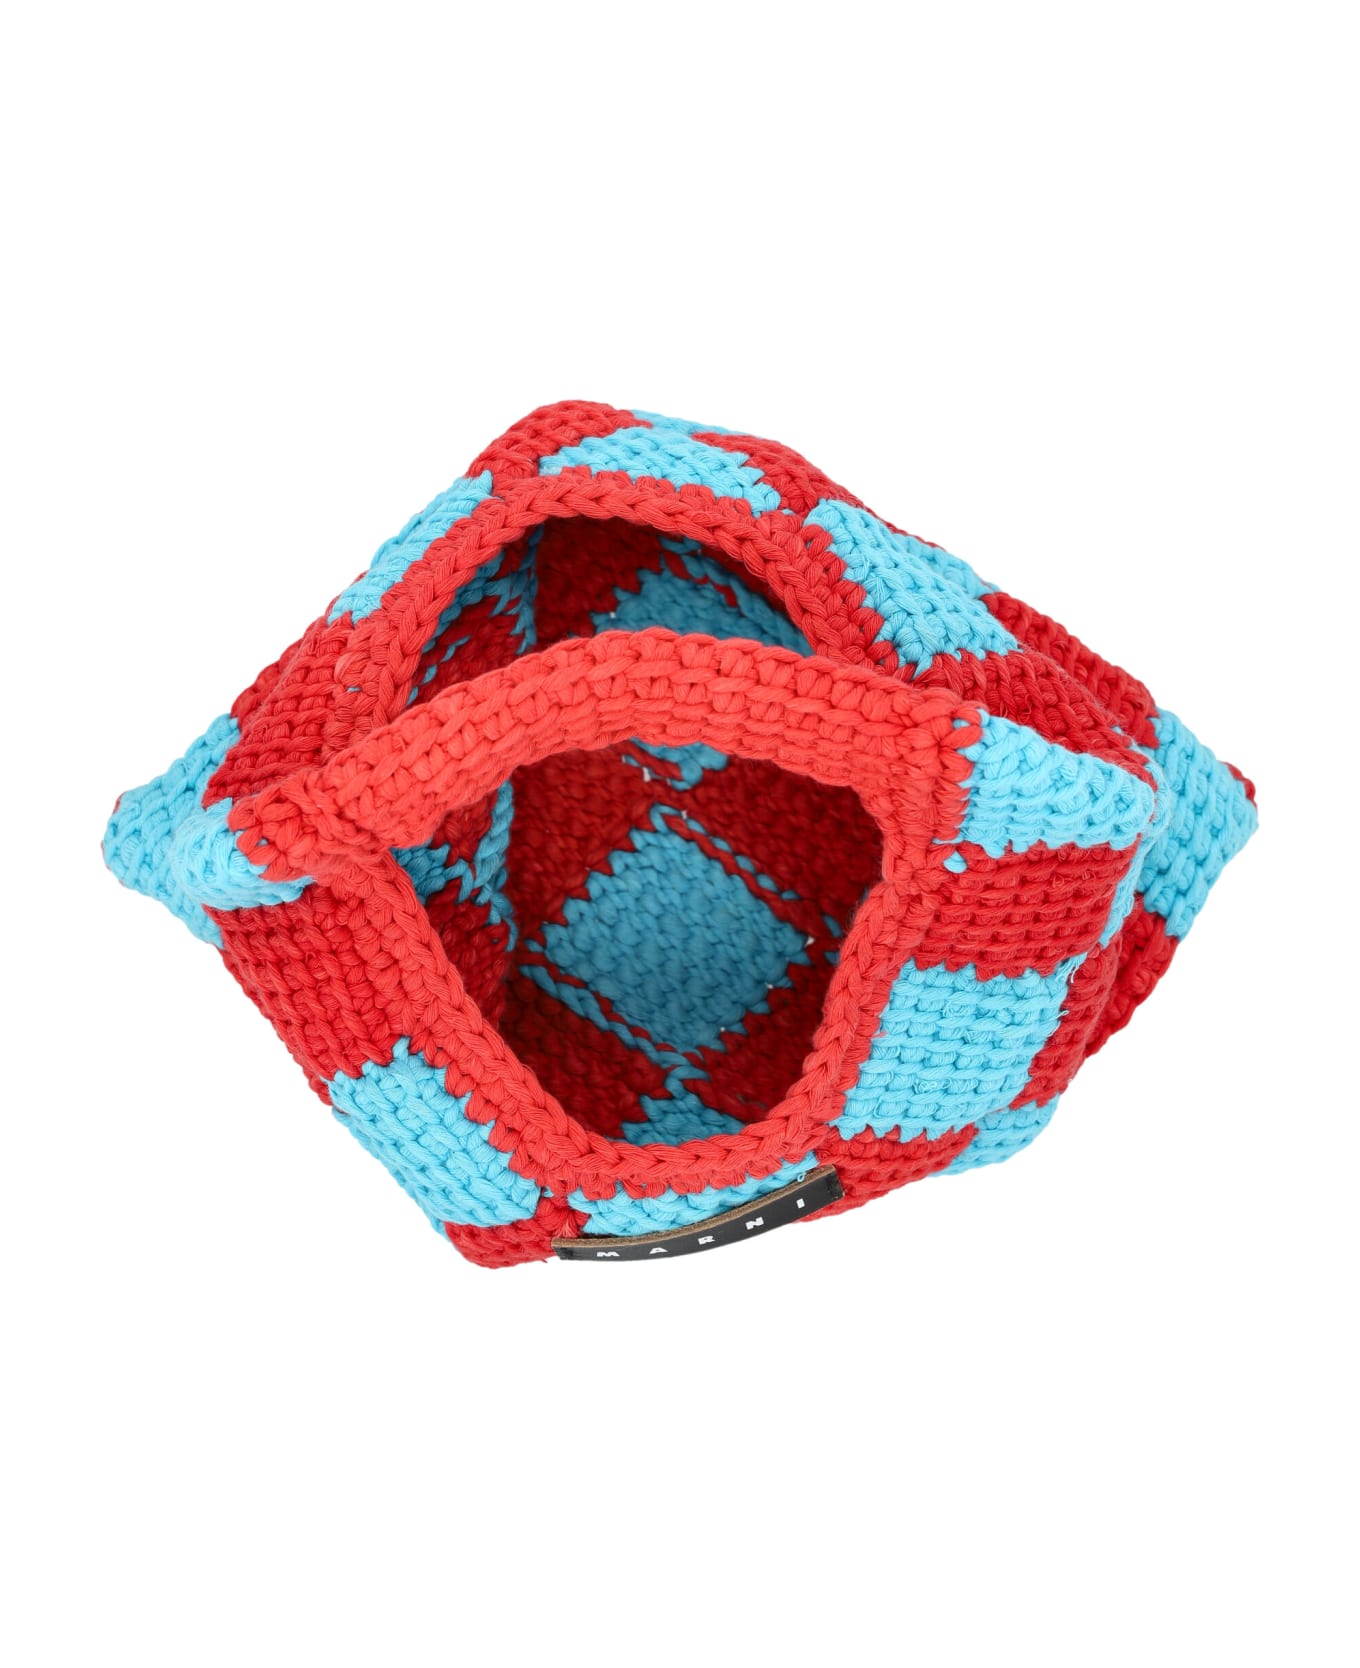 Marni tailored Diamond Crochet Bag - BLUE/RED